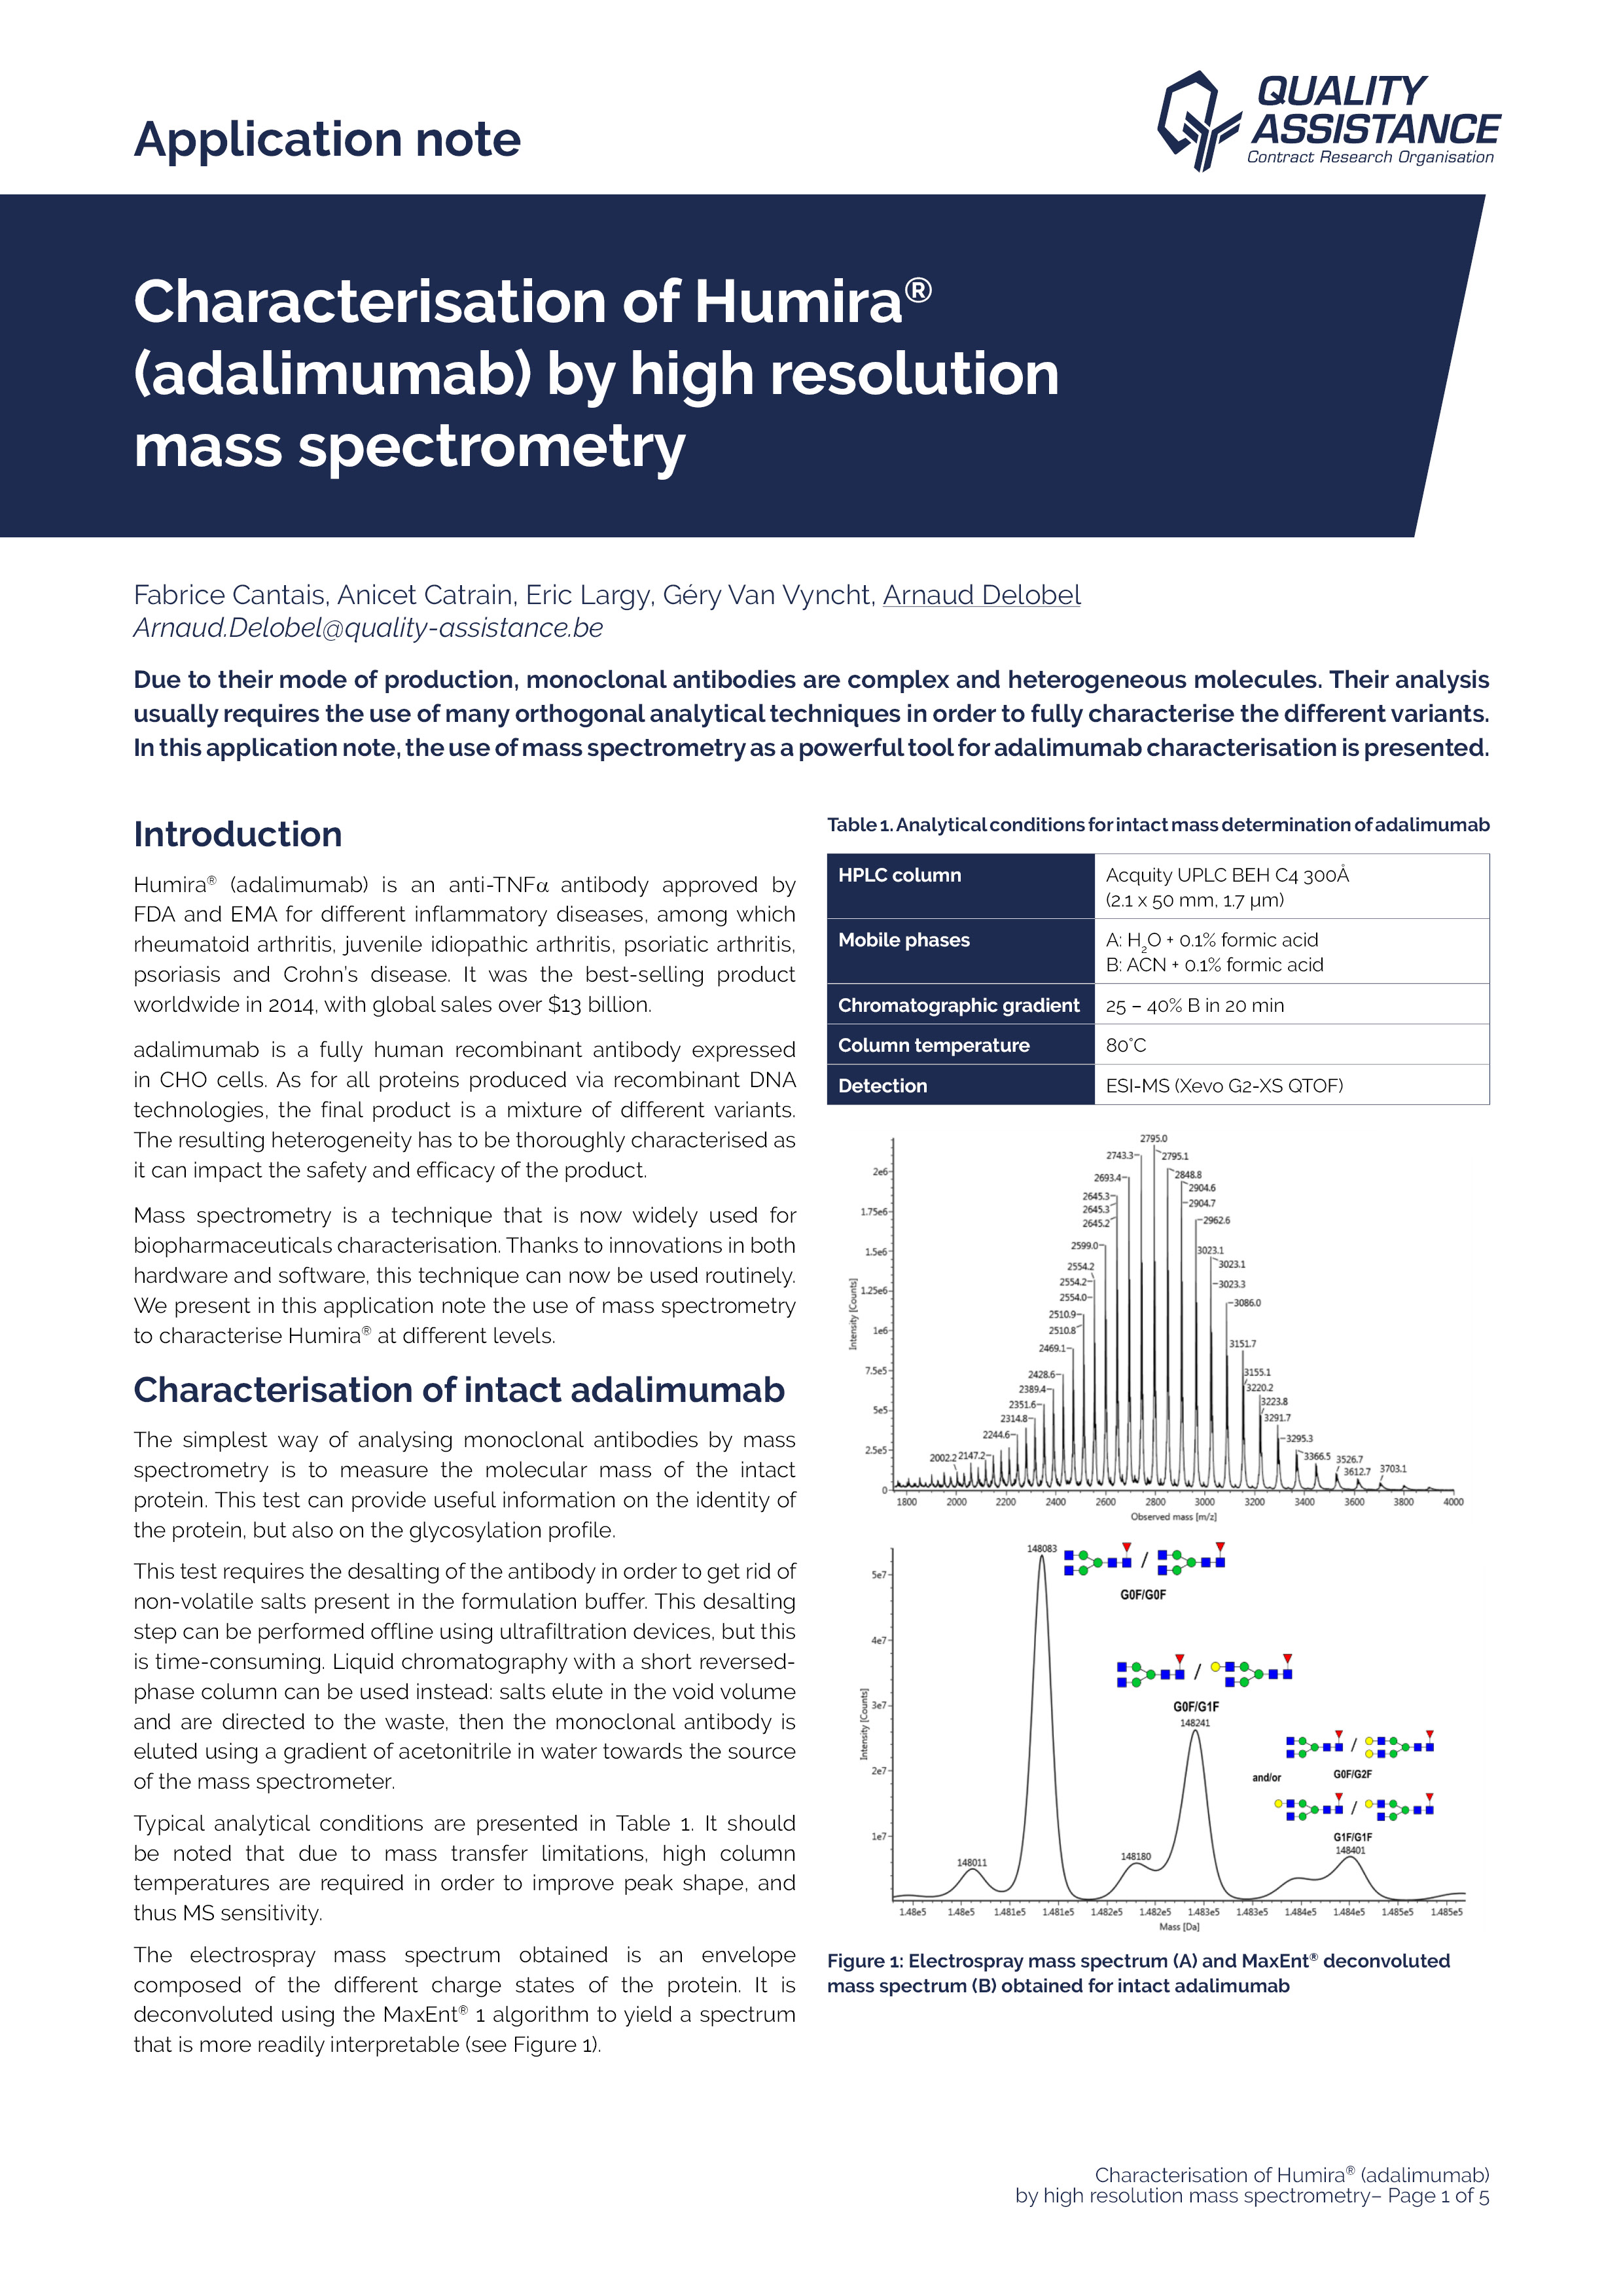 Characterisation of Humira Adalimumab by high resolution mass spectrometry